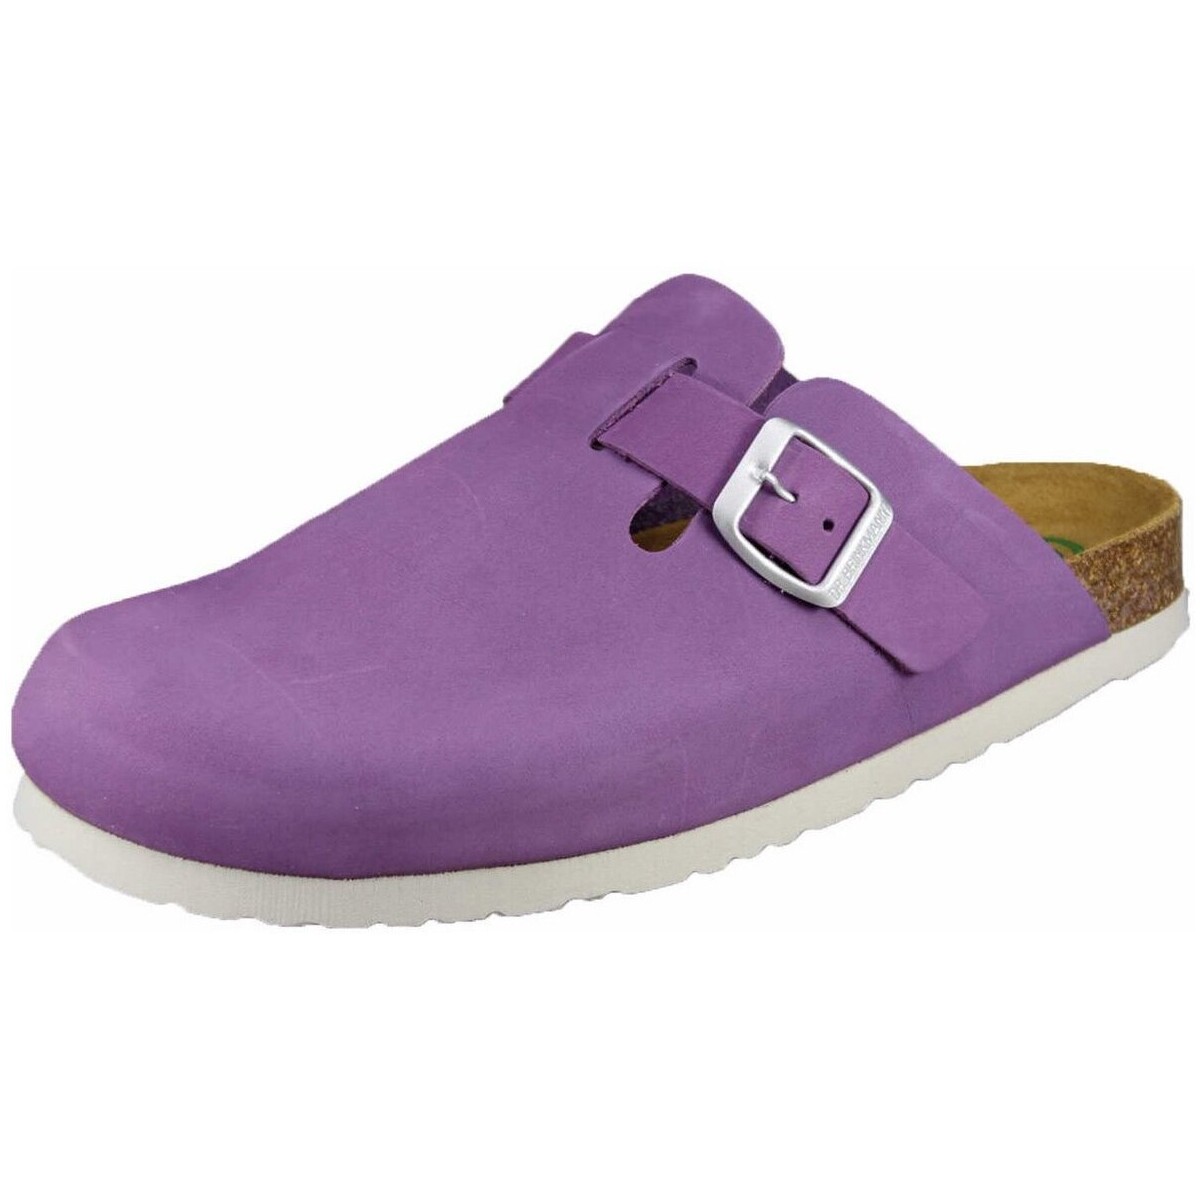 Schuhe Damen Pantoletten / Clogs  Pantoletten 600101-59 Violett